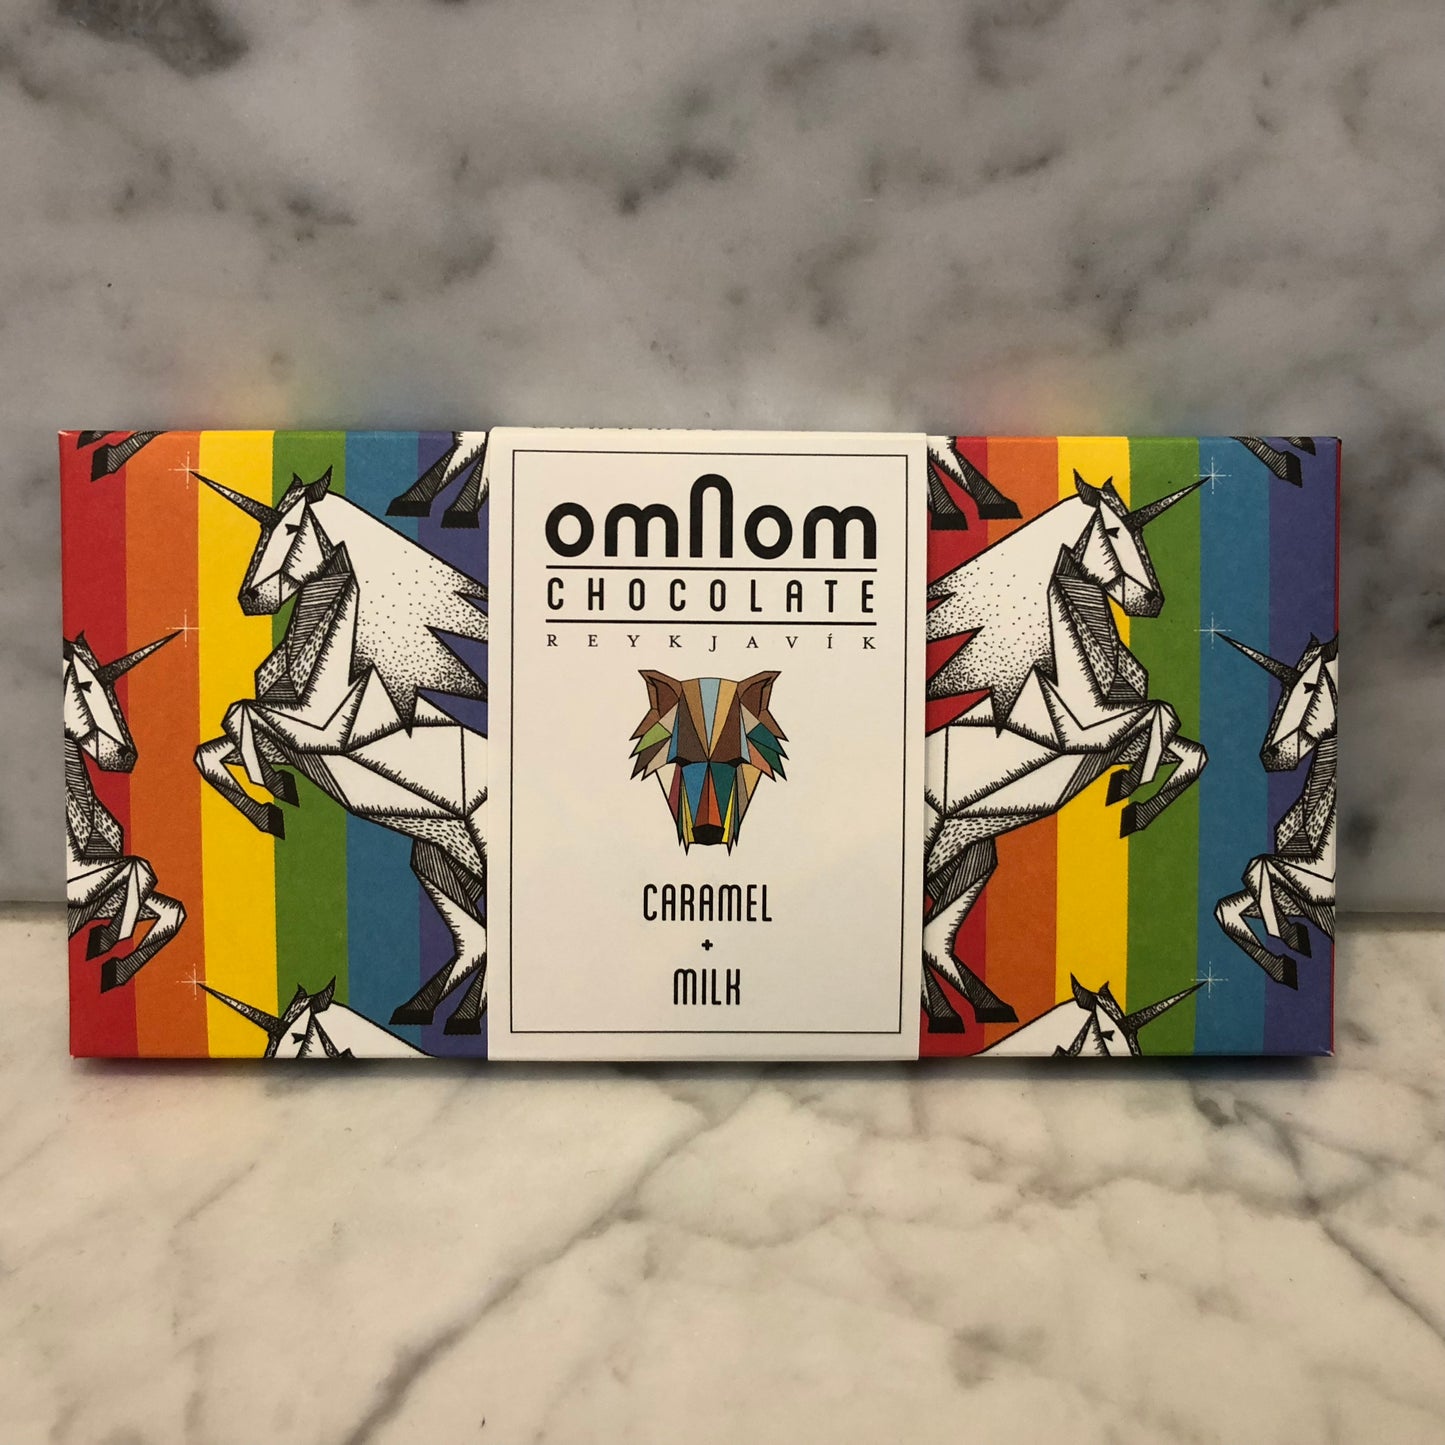 Omnom Caramel & Milk